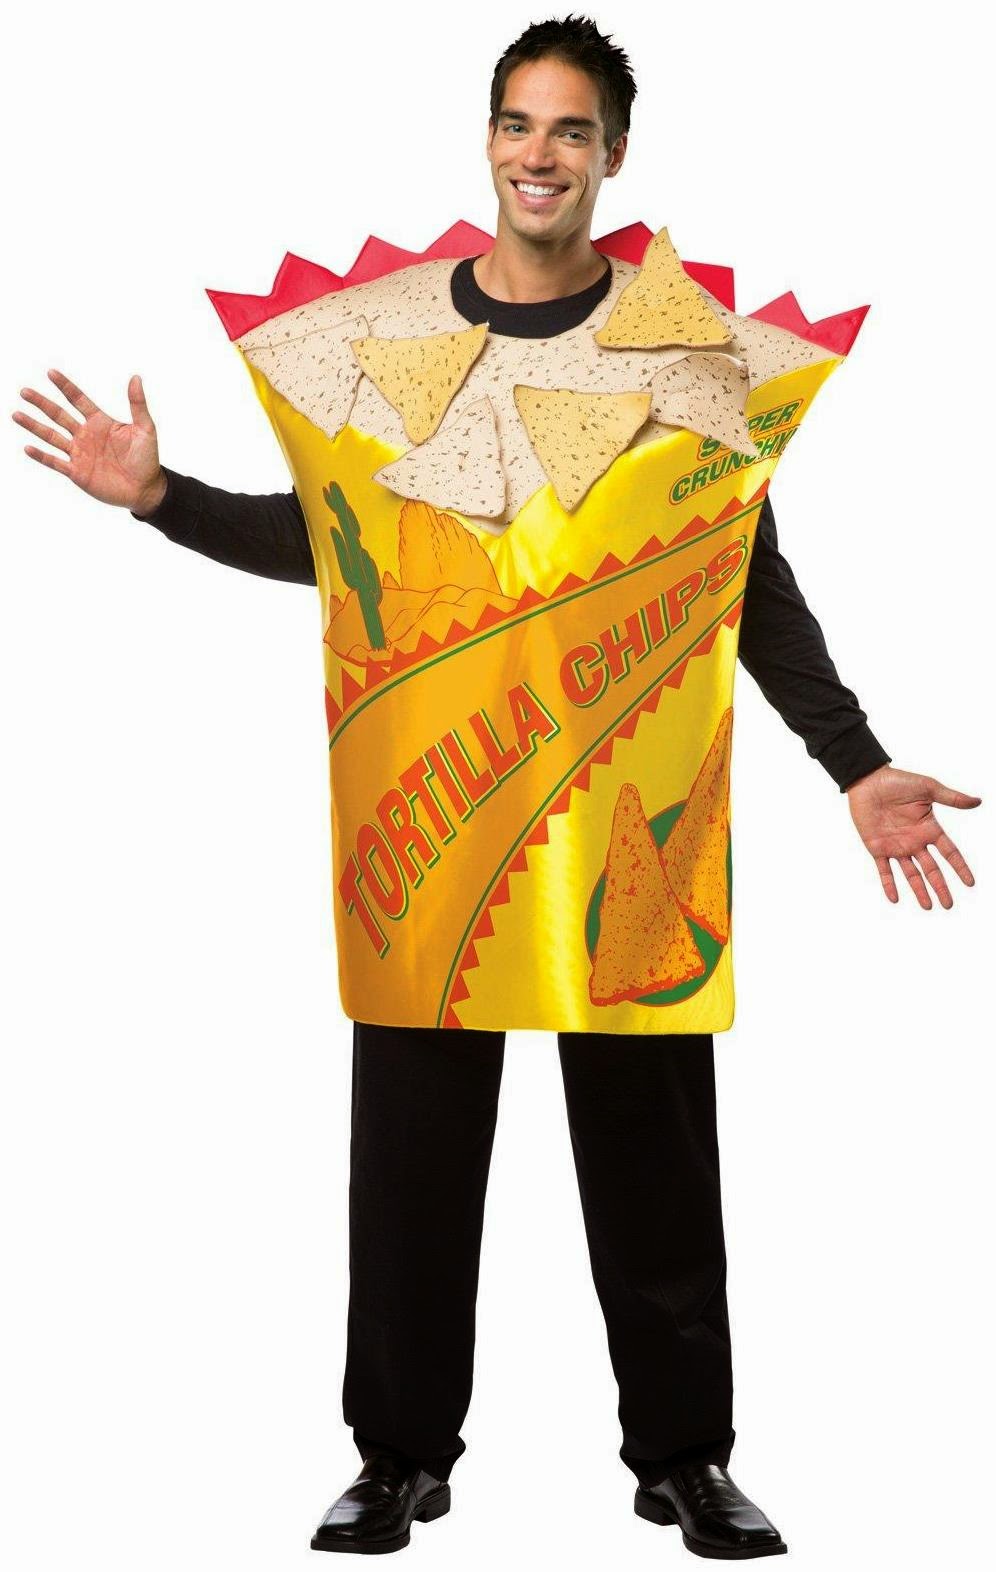 Tortilla Chips Costume